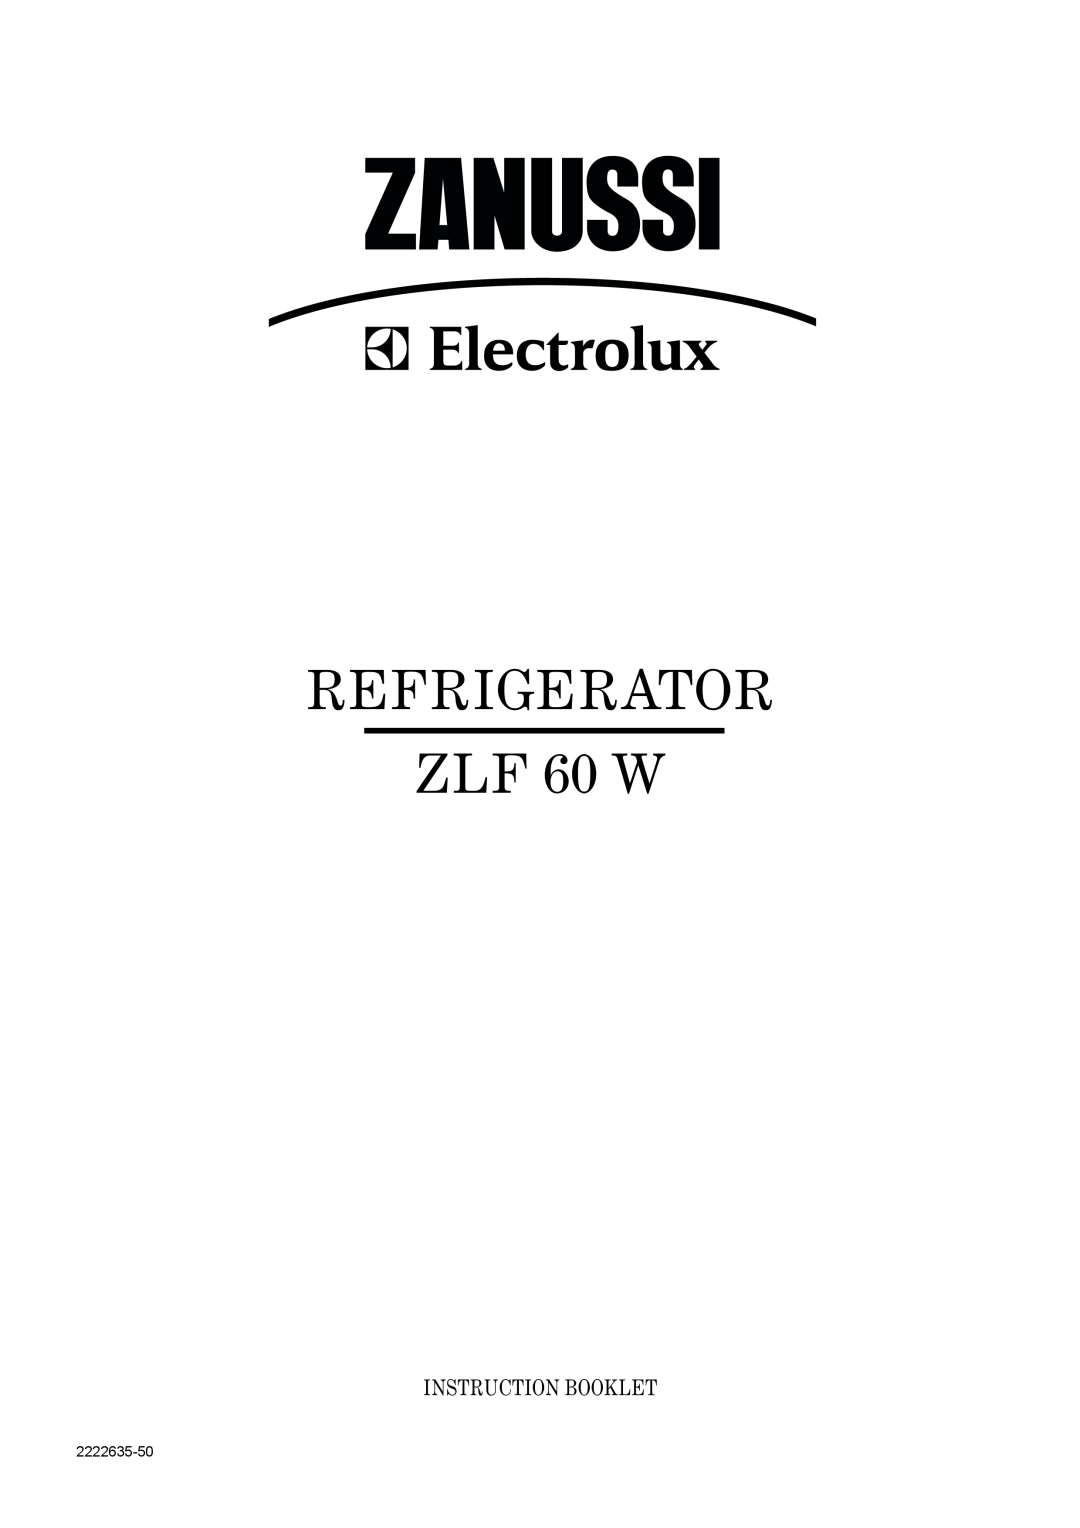 Zanussi ZLF 60 W manual Refrigerator, Instruction Booklet, 2222635-50 